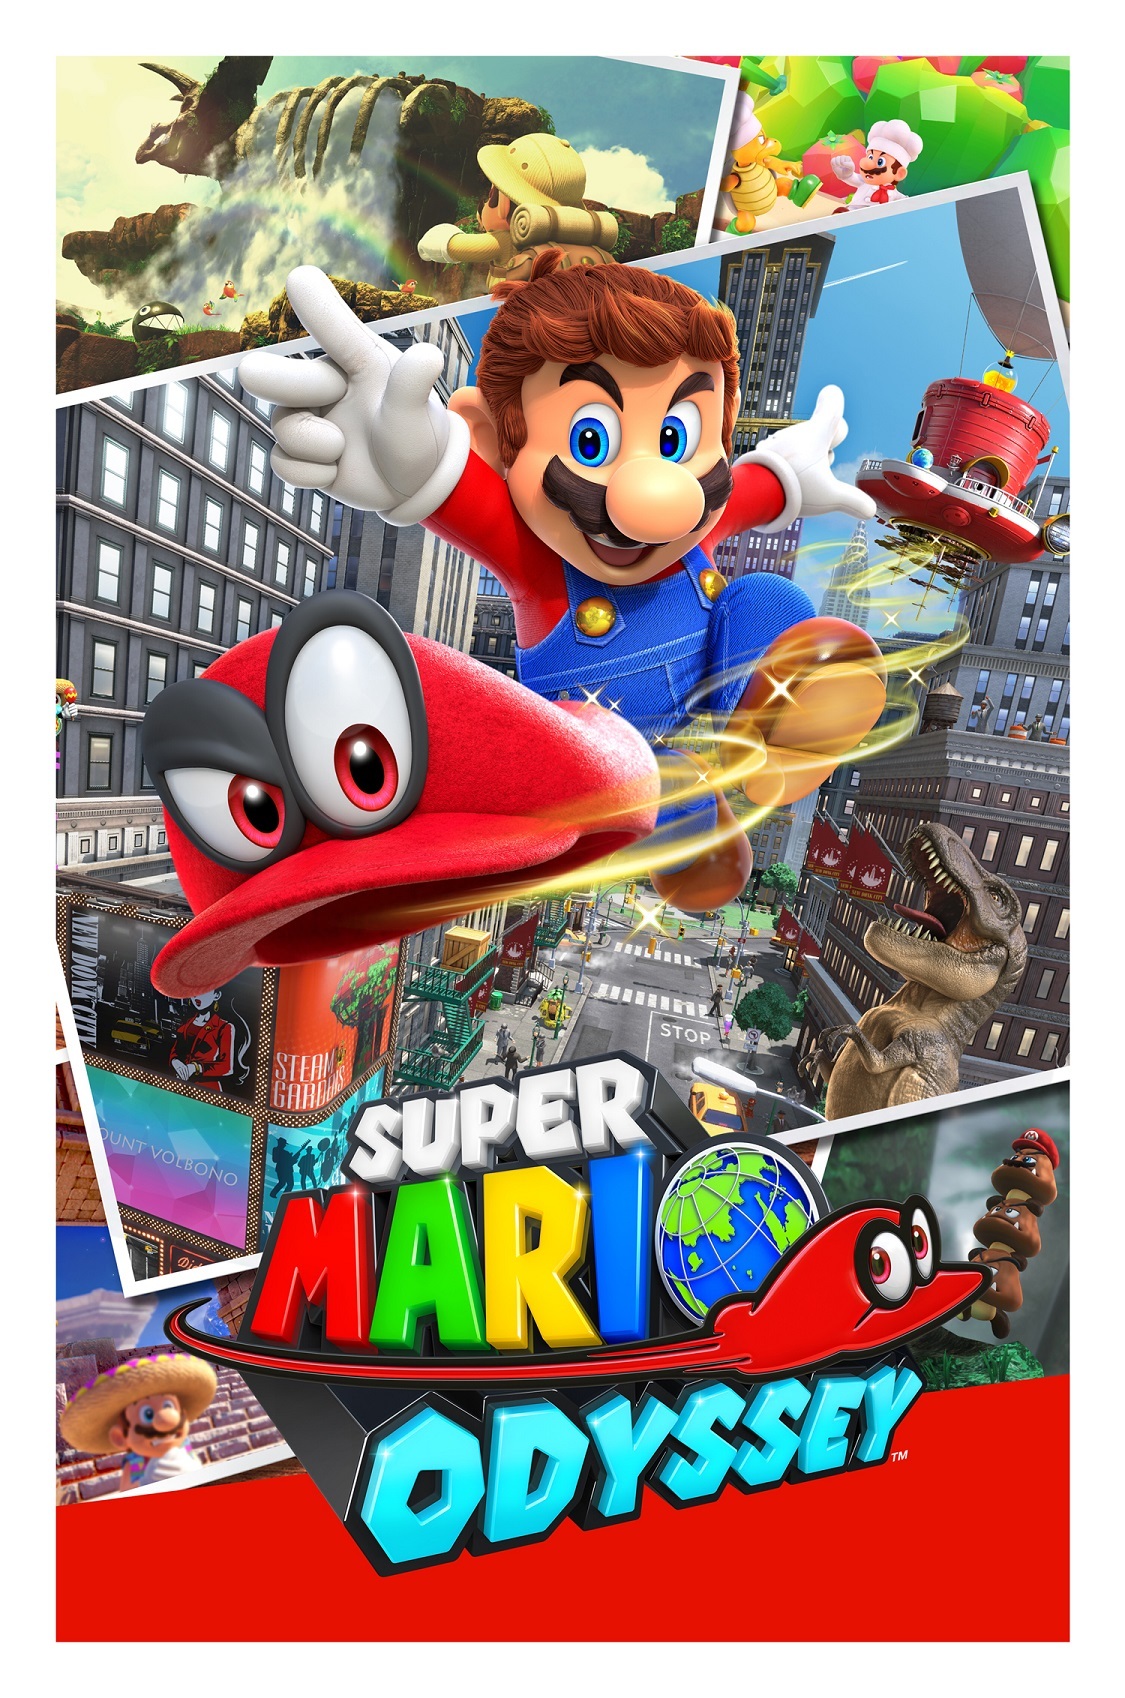 Artstation Super Mario Odyssey Fanart - vrogue.co